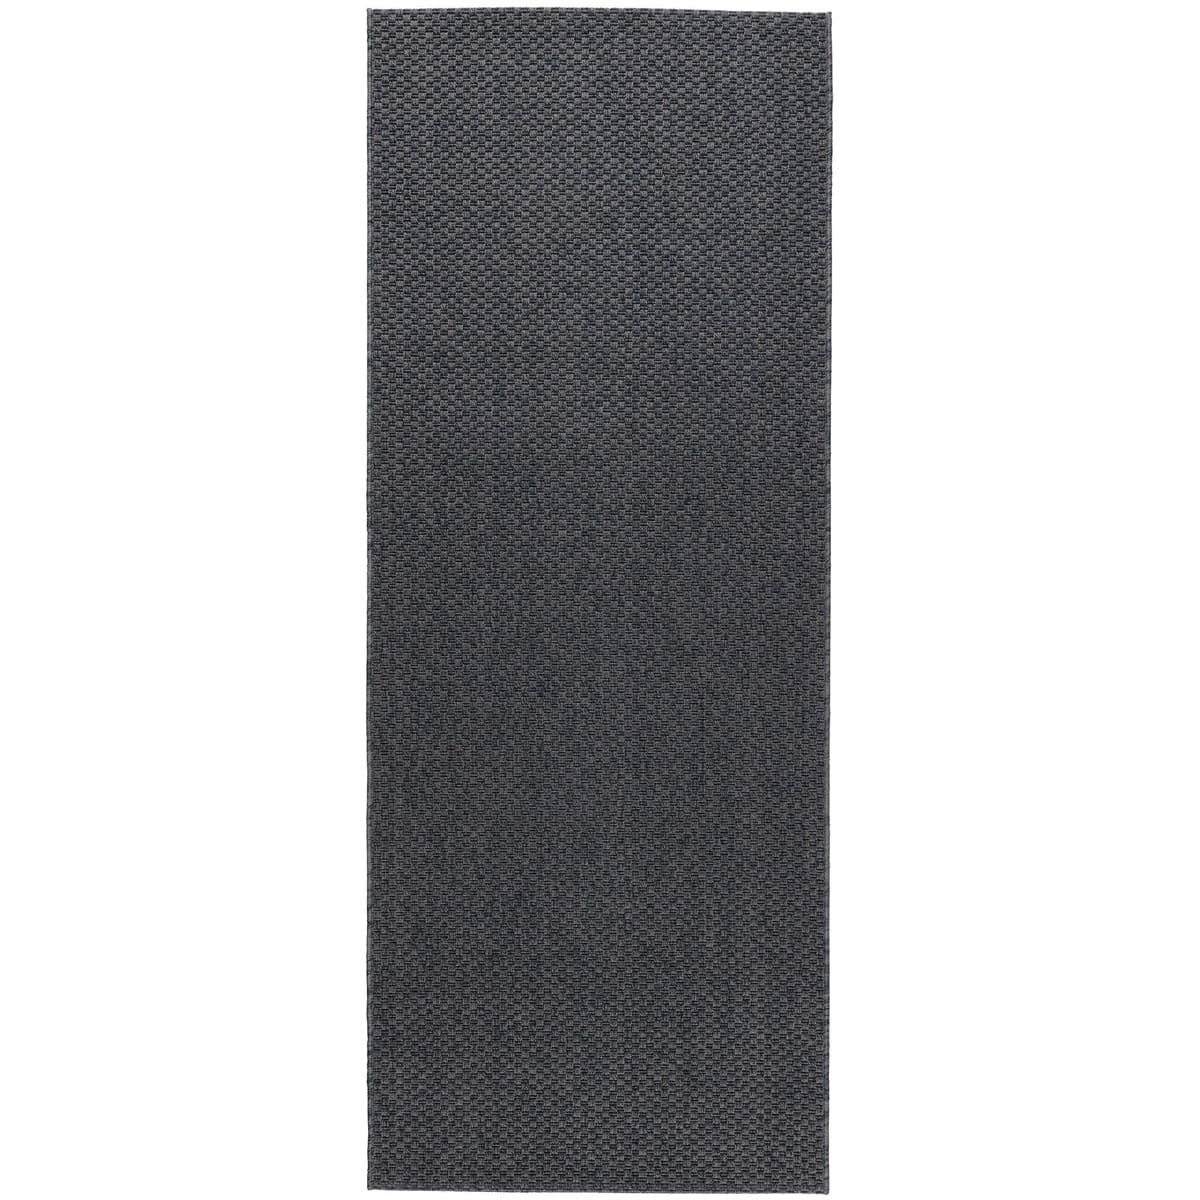 Ковер Ikea Morum 80х200 см, темно-серый ковер тамитекс алькантра